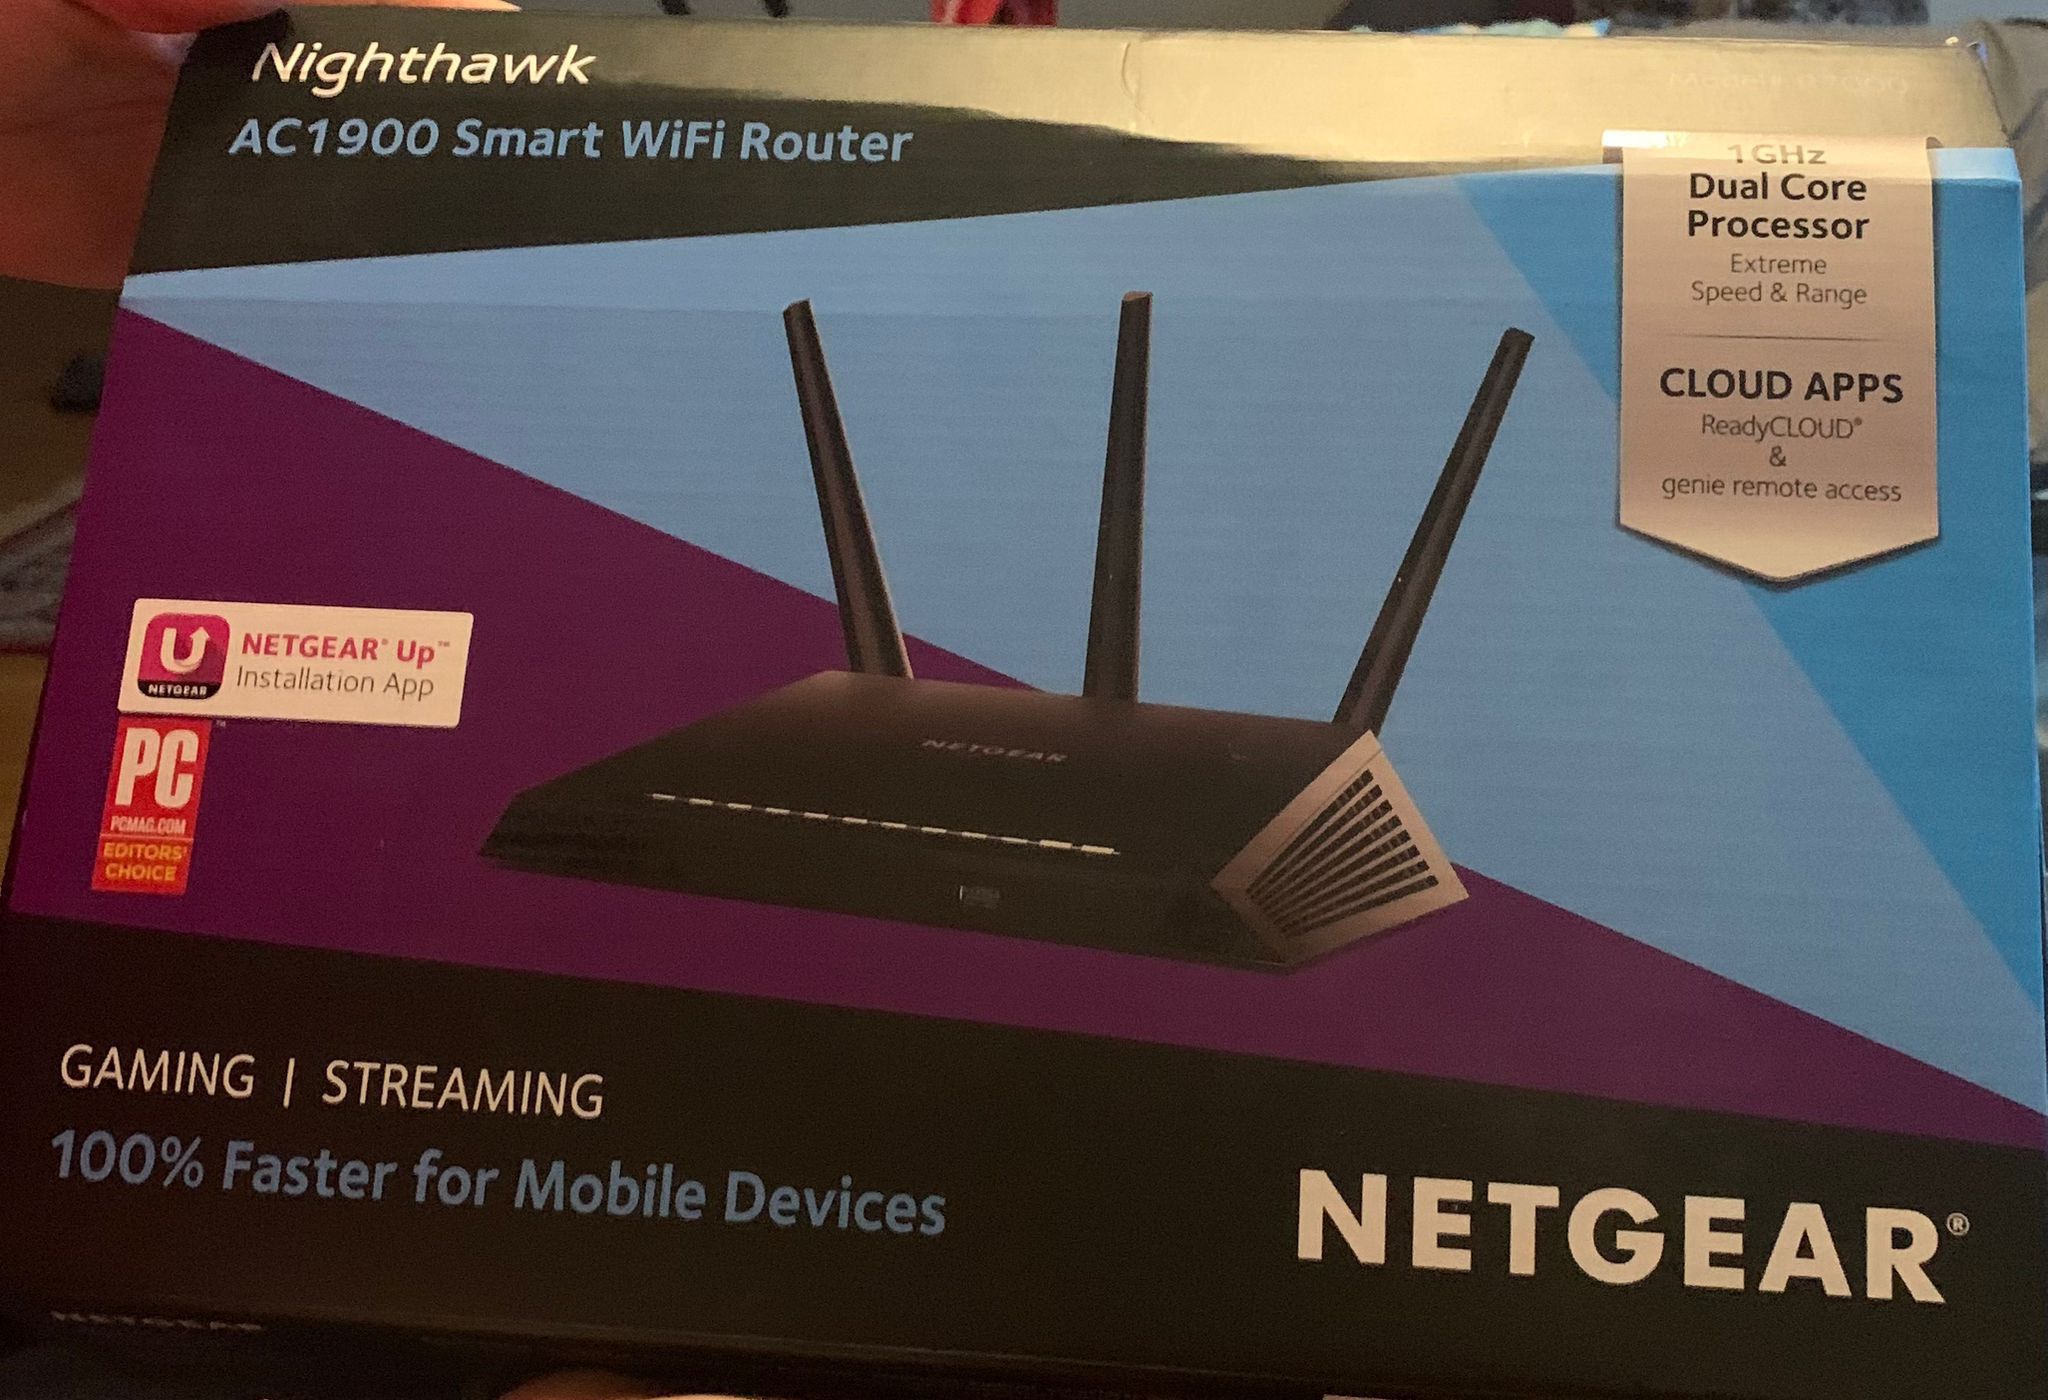 Nighthawk Ac1900 Smart Wi-Fi Router 